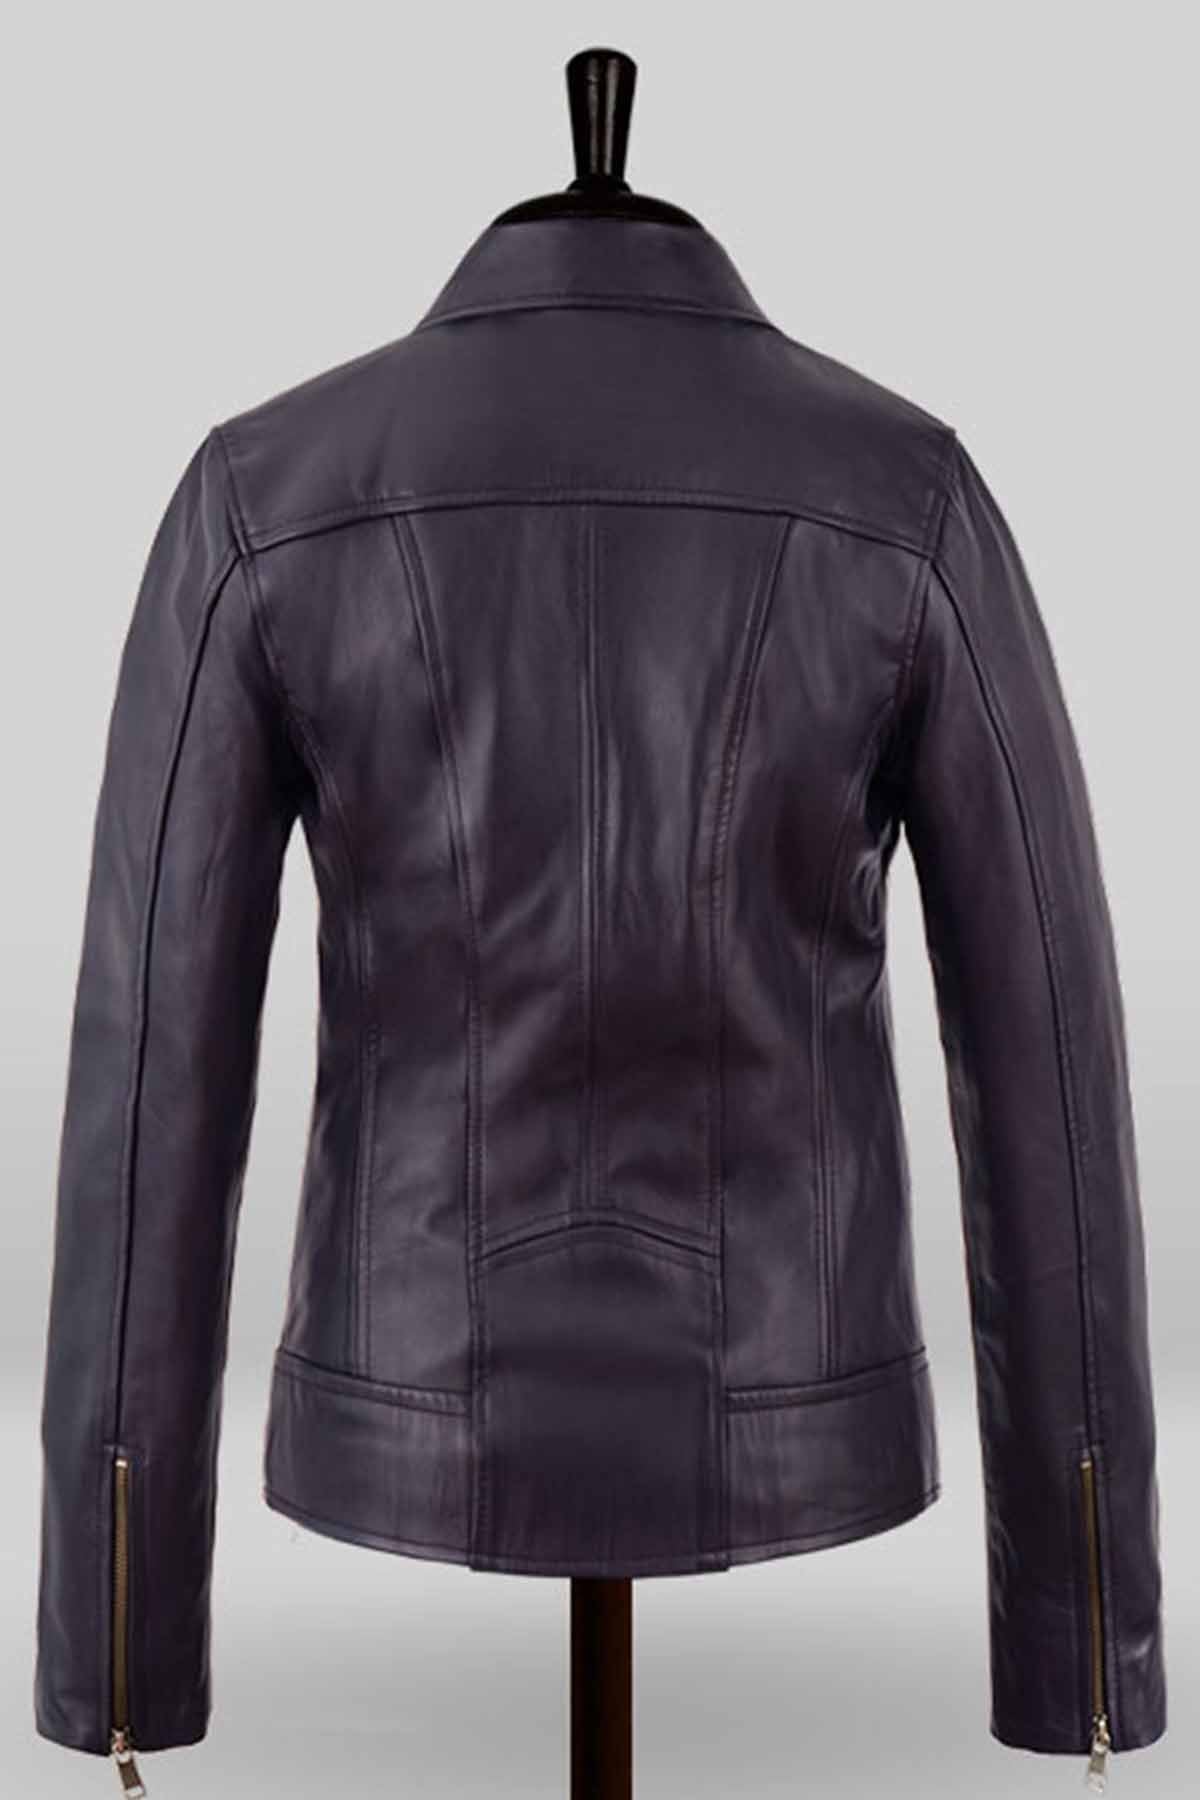 Amazing Purple Natalie Portman Vox Lux Leather Jacket